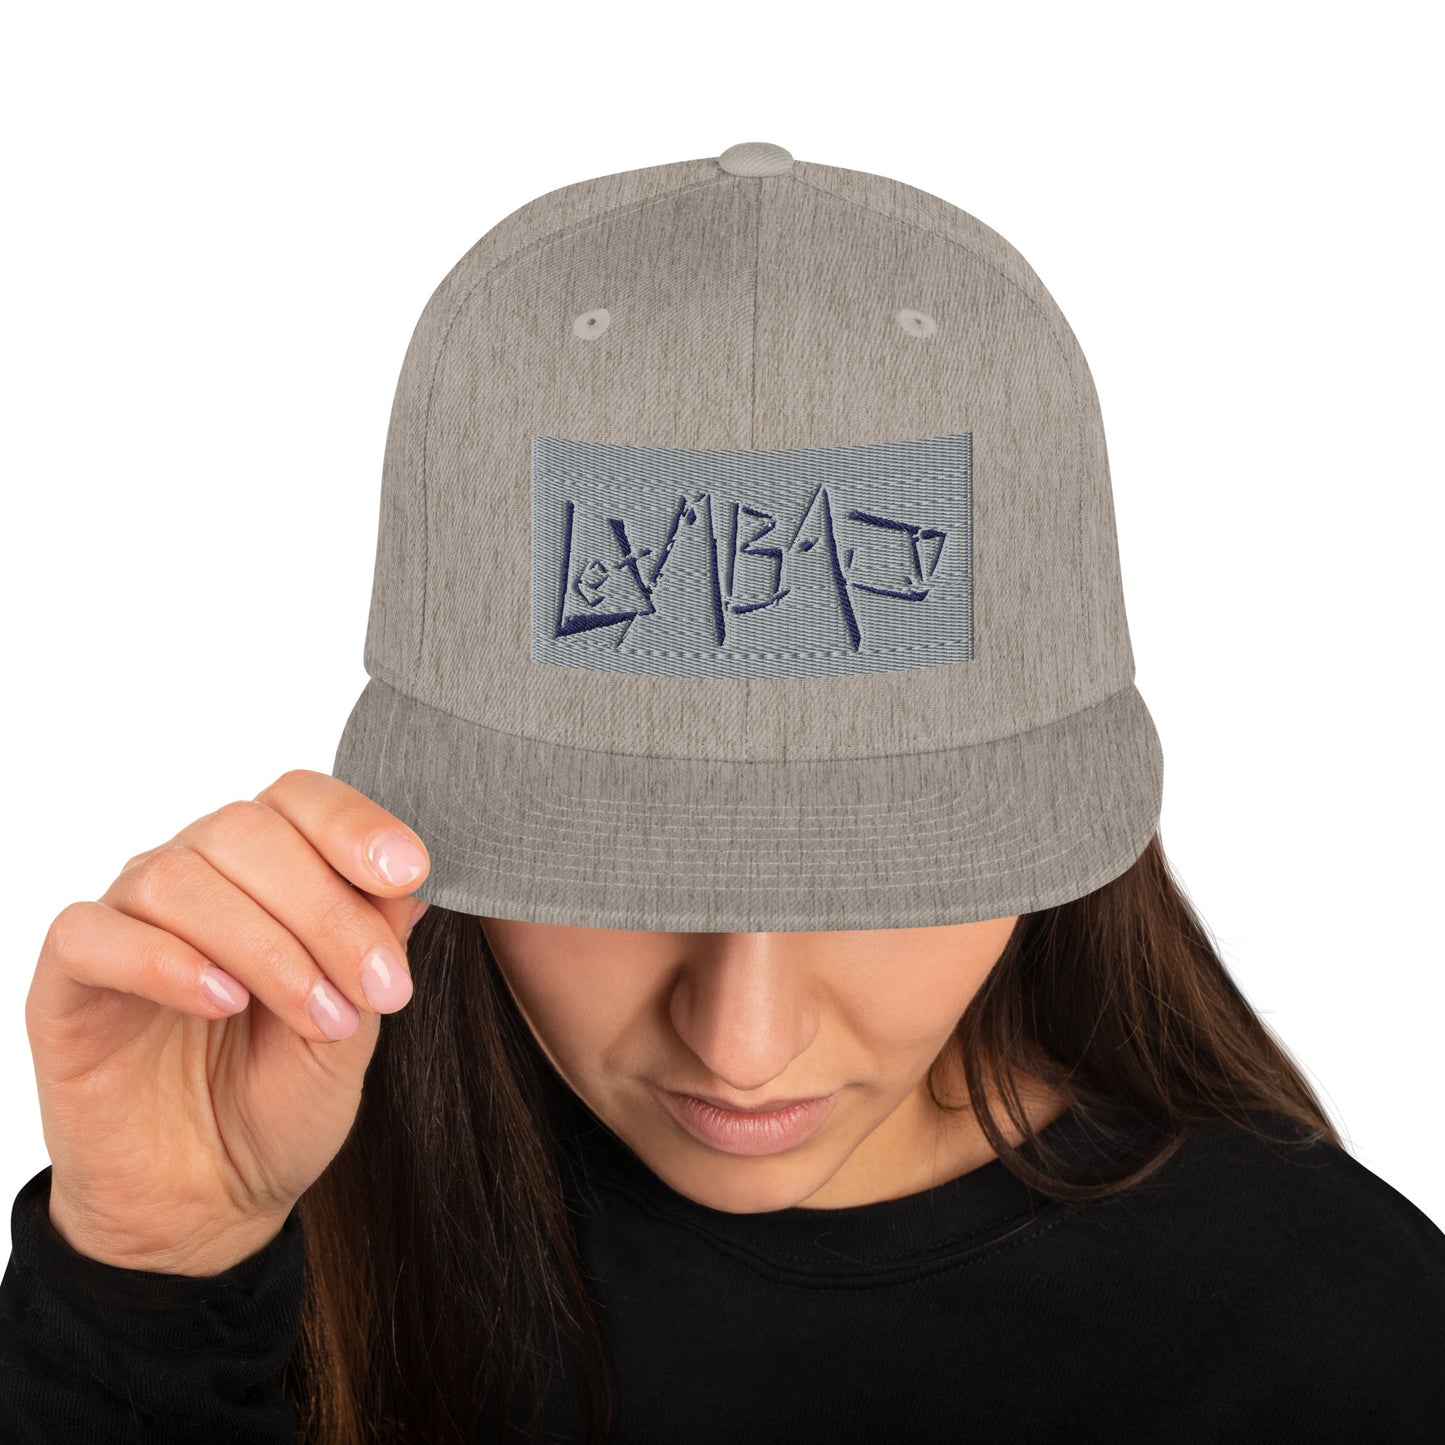 LMBAK (Let Me Be A Kid) Snapback Hat